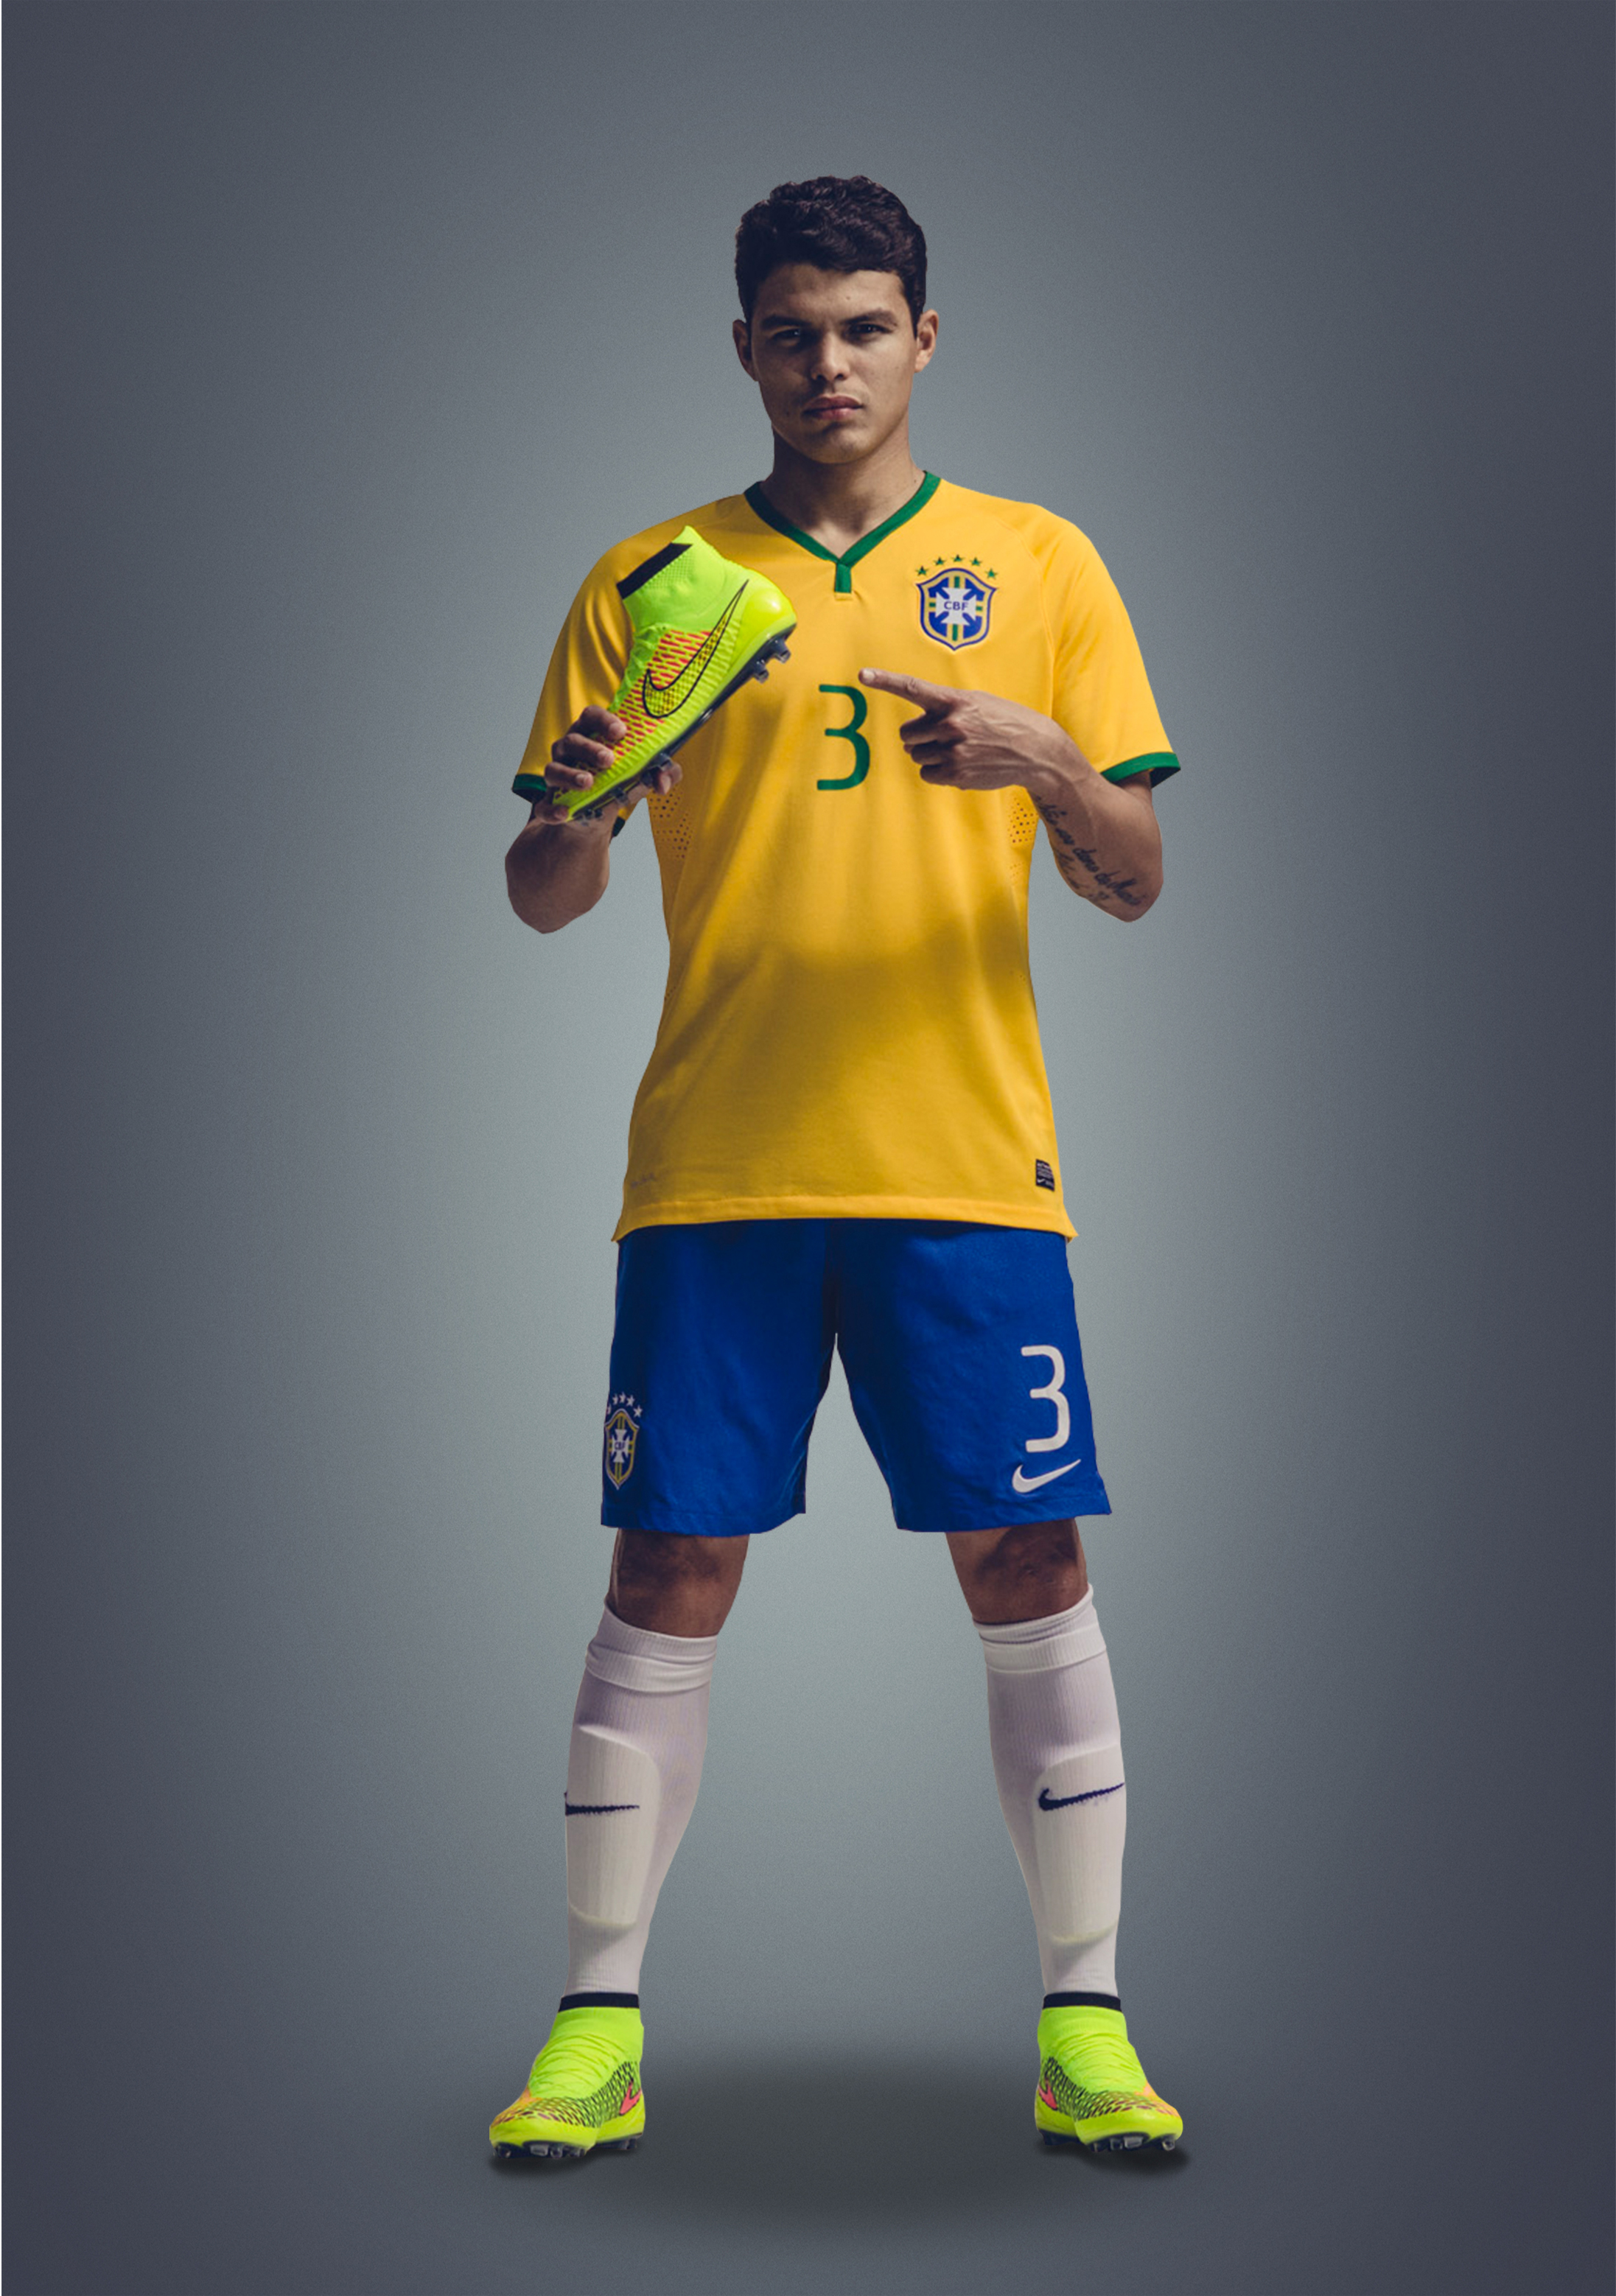 Brazil's Thiago Silva in Nike Magista boots.© NIKE INC.